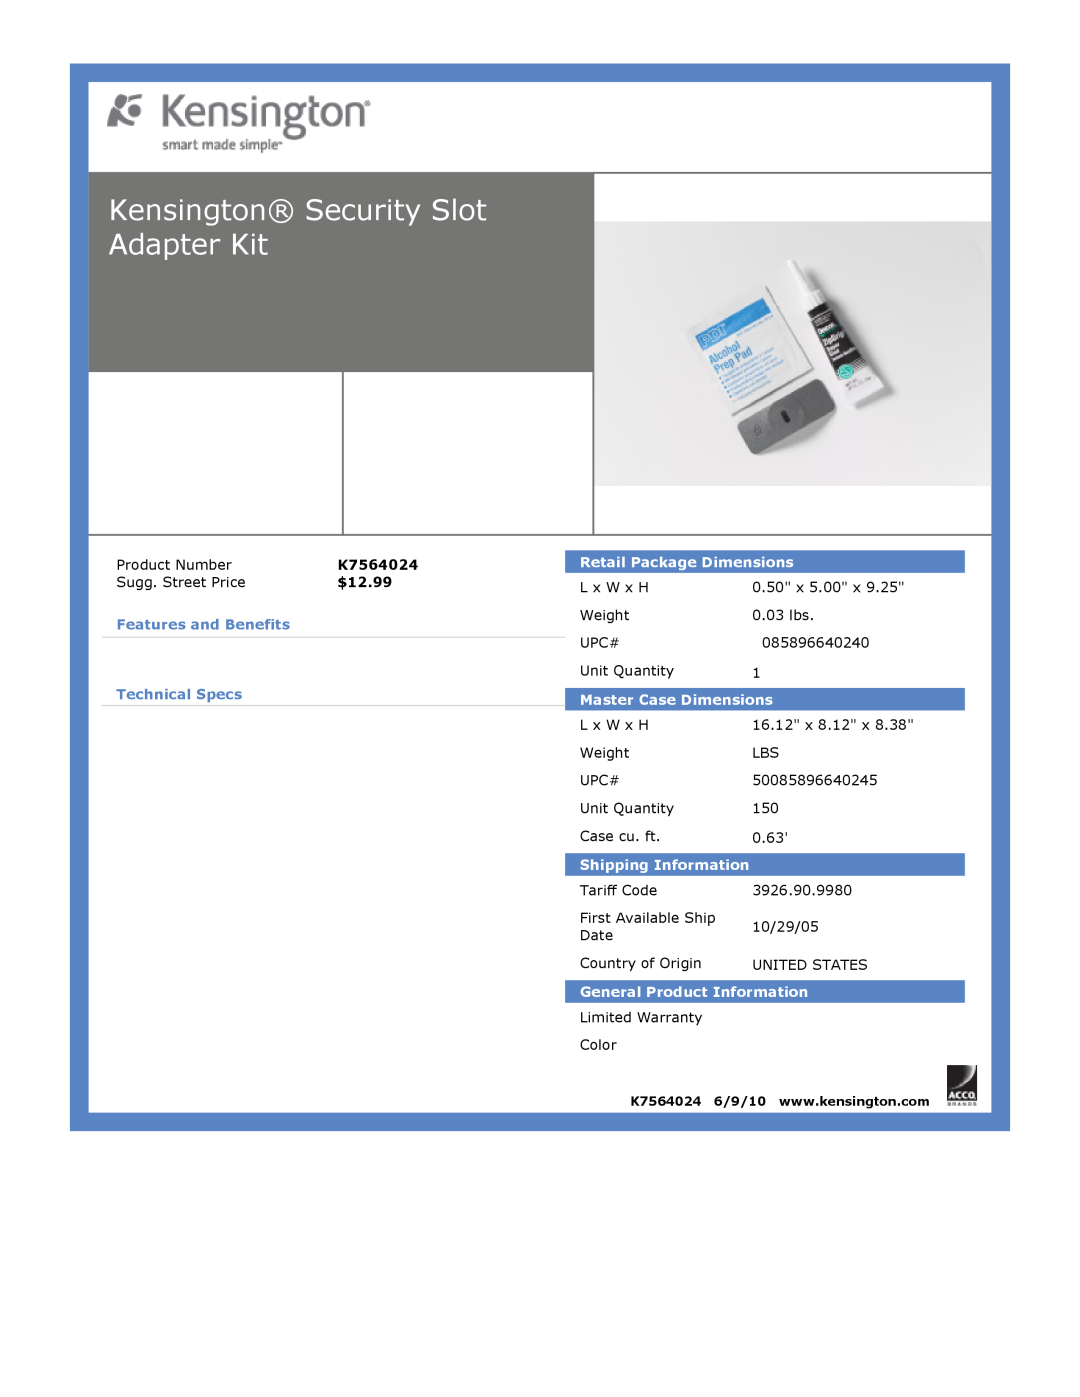 Kensington EU64325 dimensions Kensington Security Slot Adapter Kit, $12.99, Features and Benefits Technical Specs 